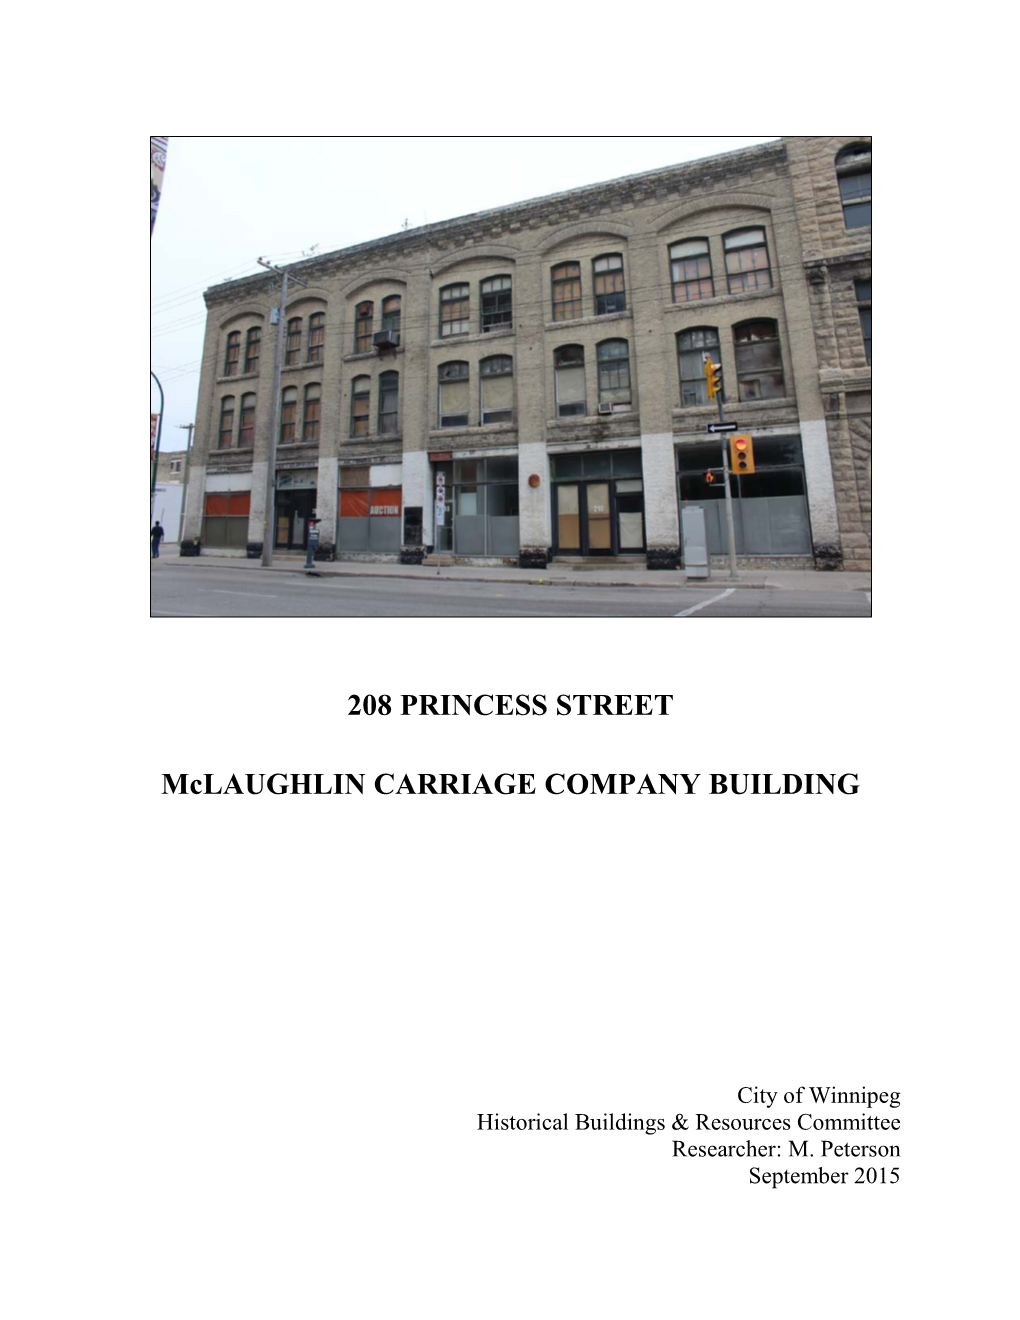 208 PRINCESS STREET Mclaughlin CARRIAGE COMPANY BUILDING